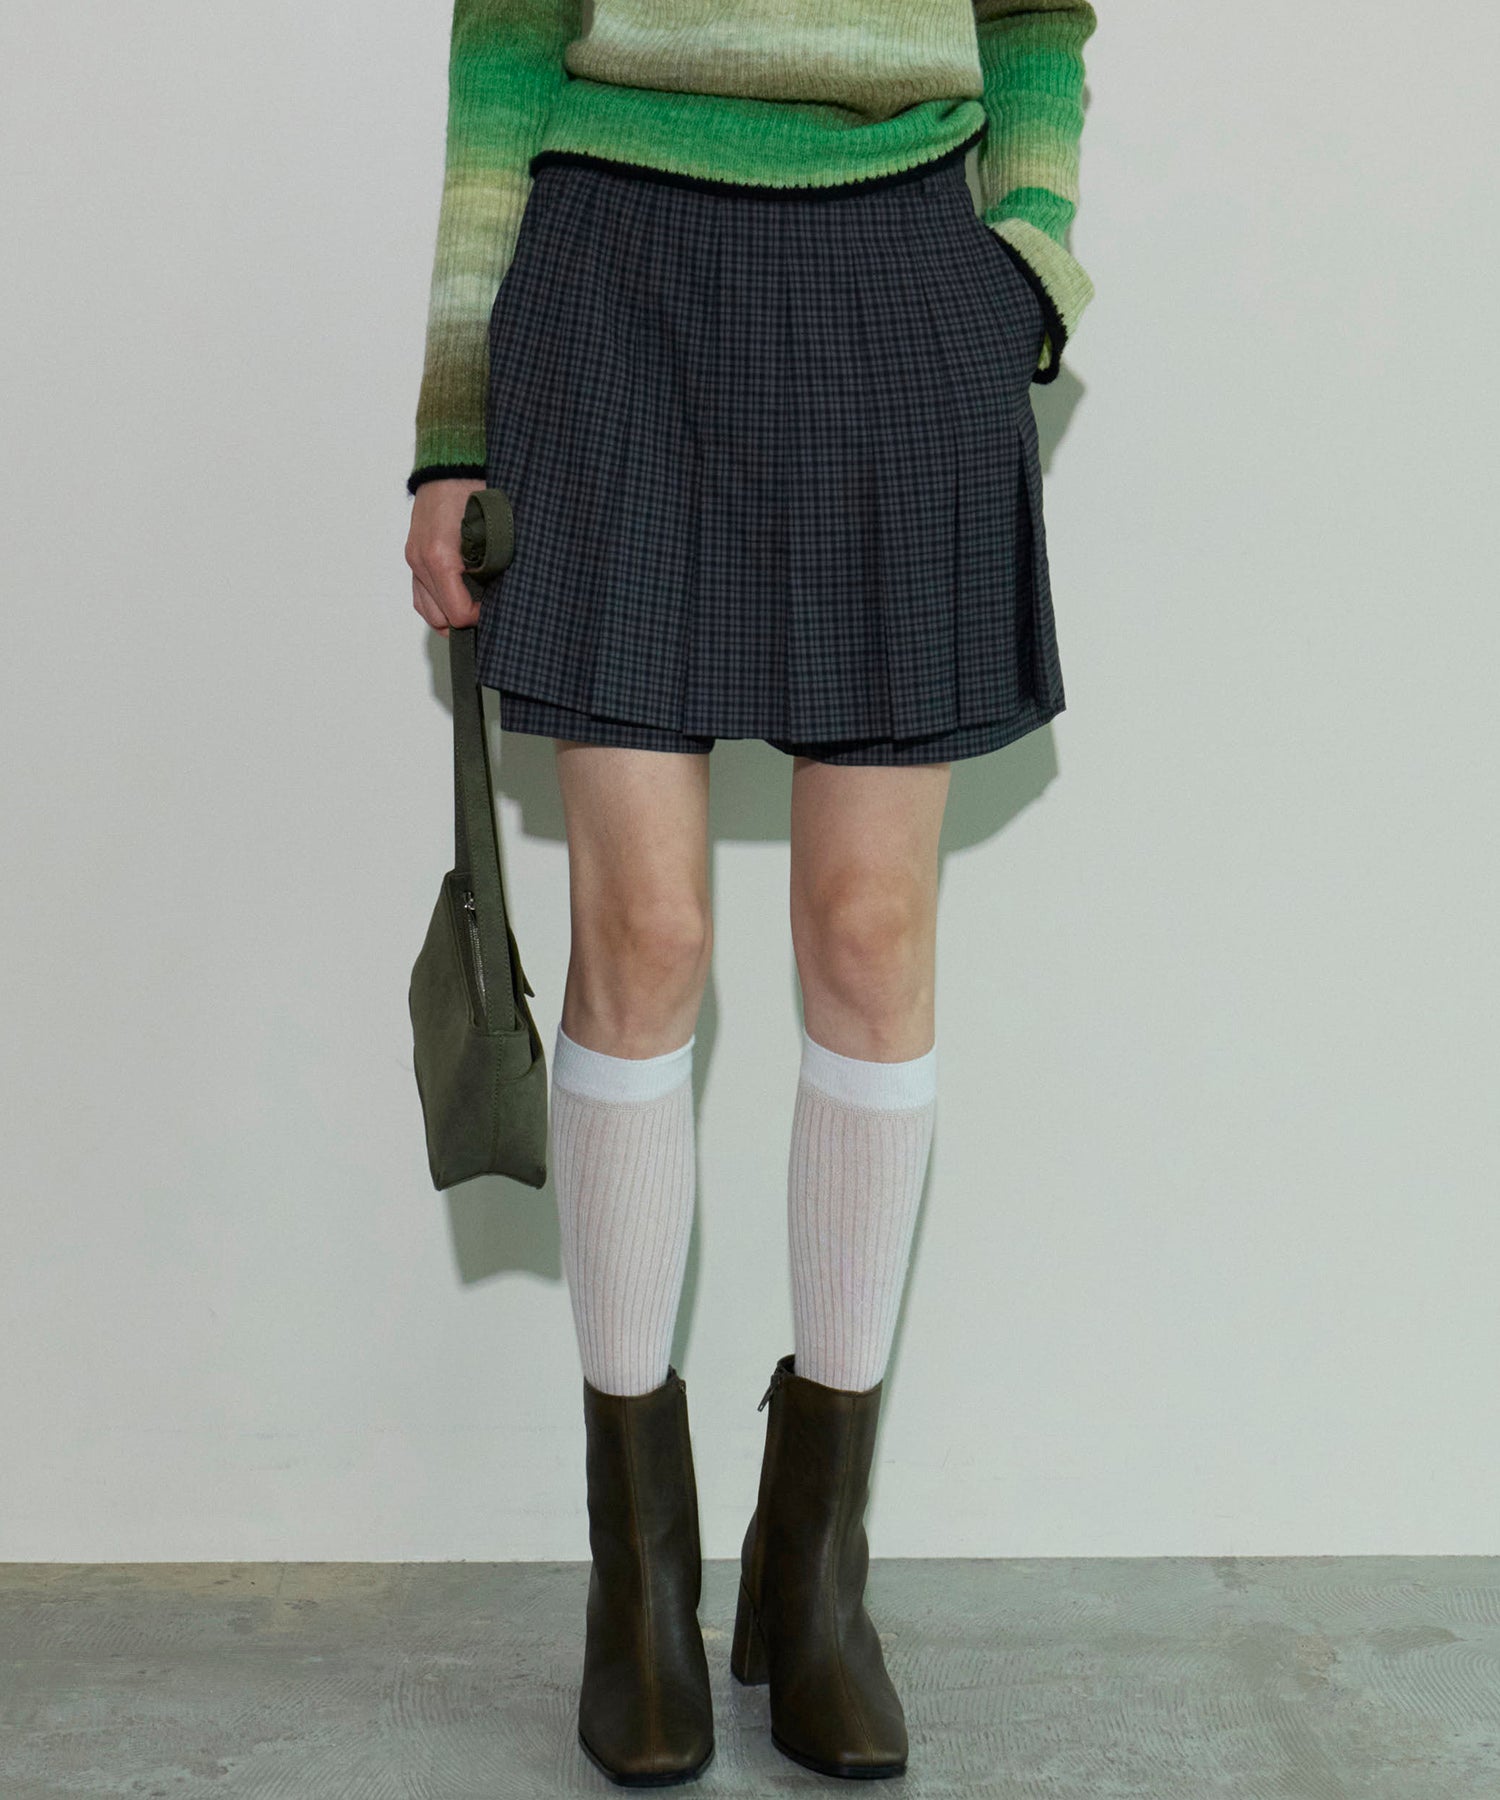 【24AUTUMN PRE-ORDER】Pleats Culotte Skirt